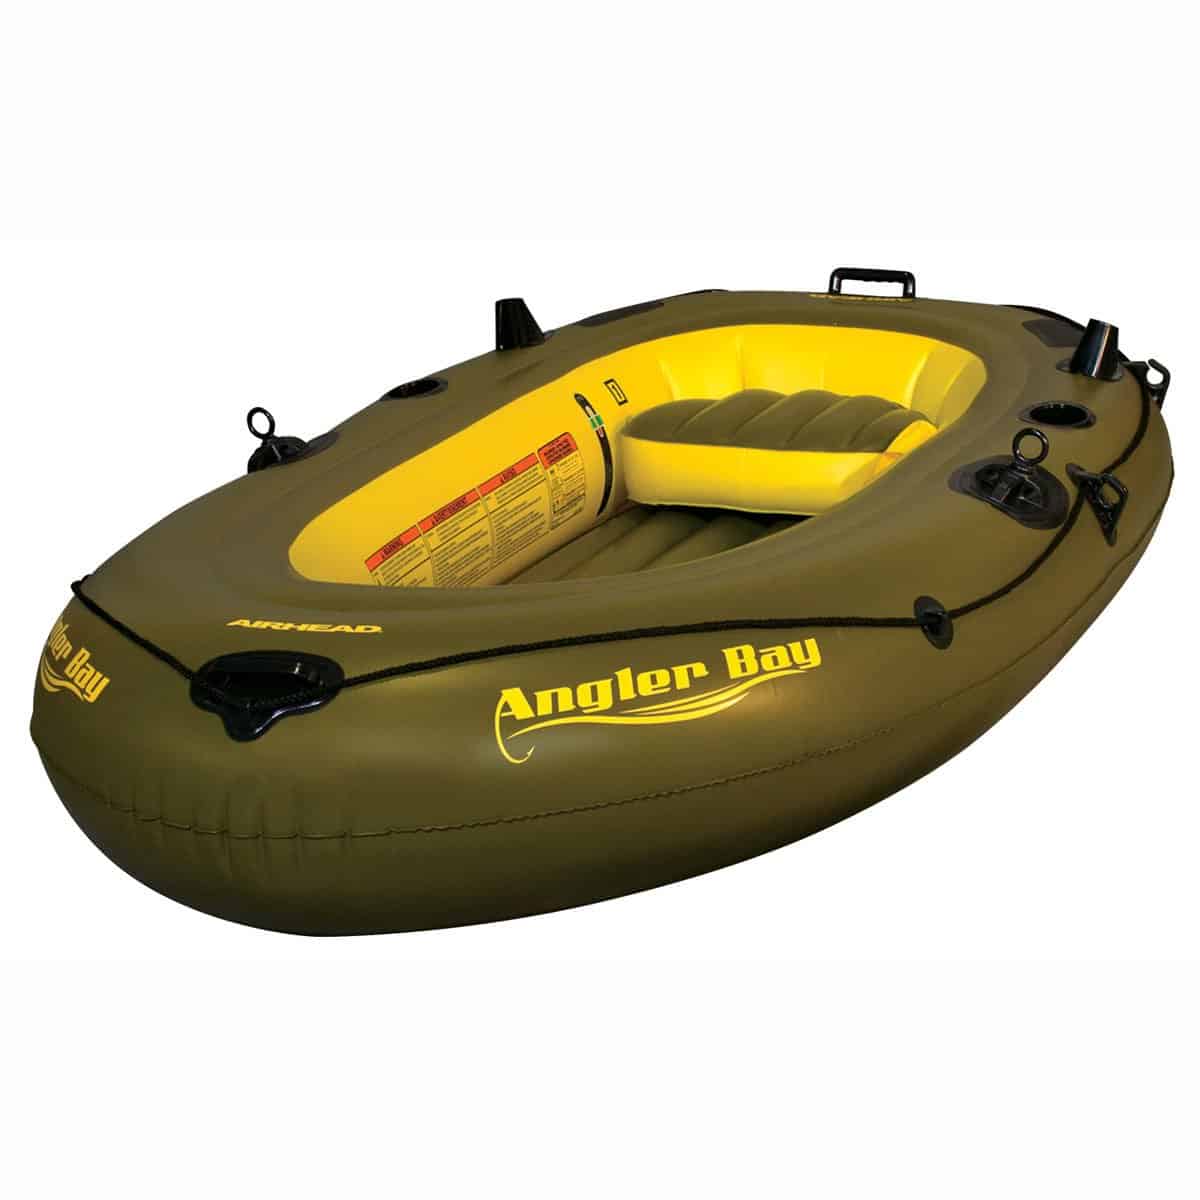 Angler Bay Inflatable Boat